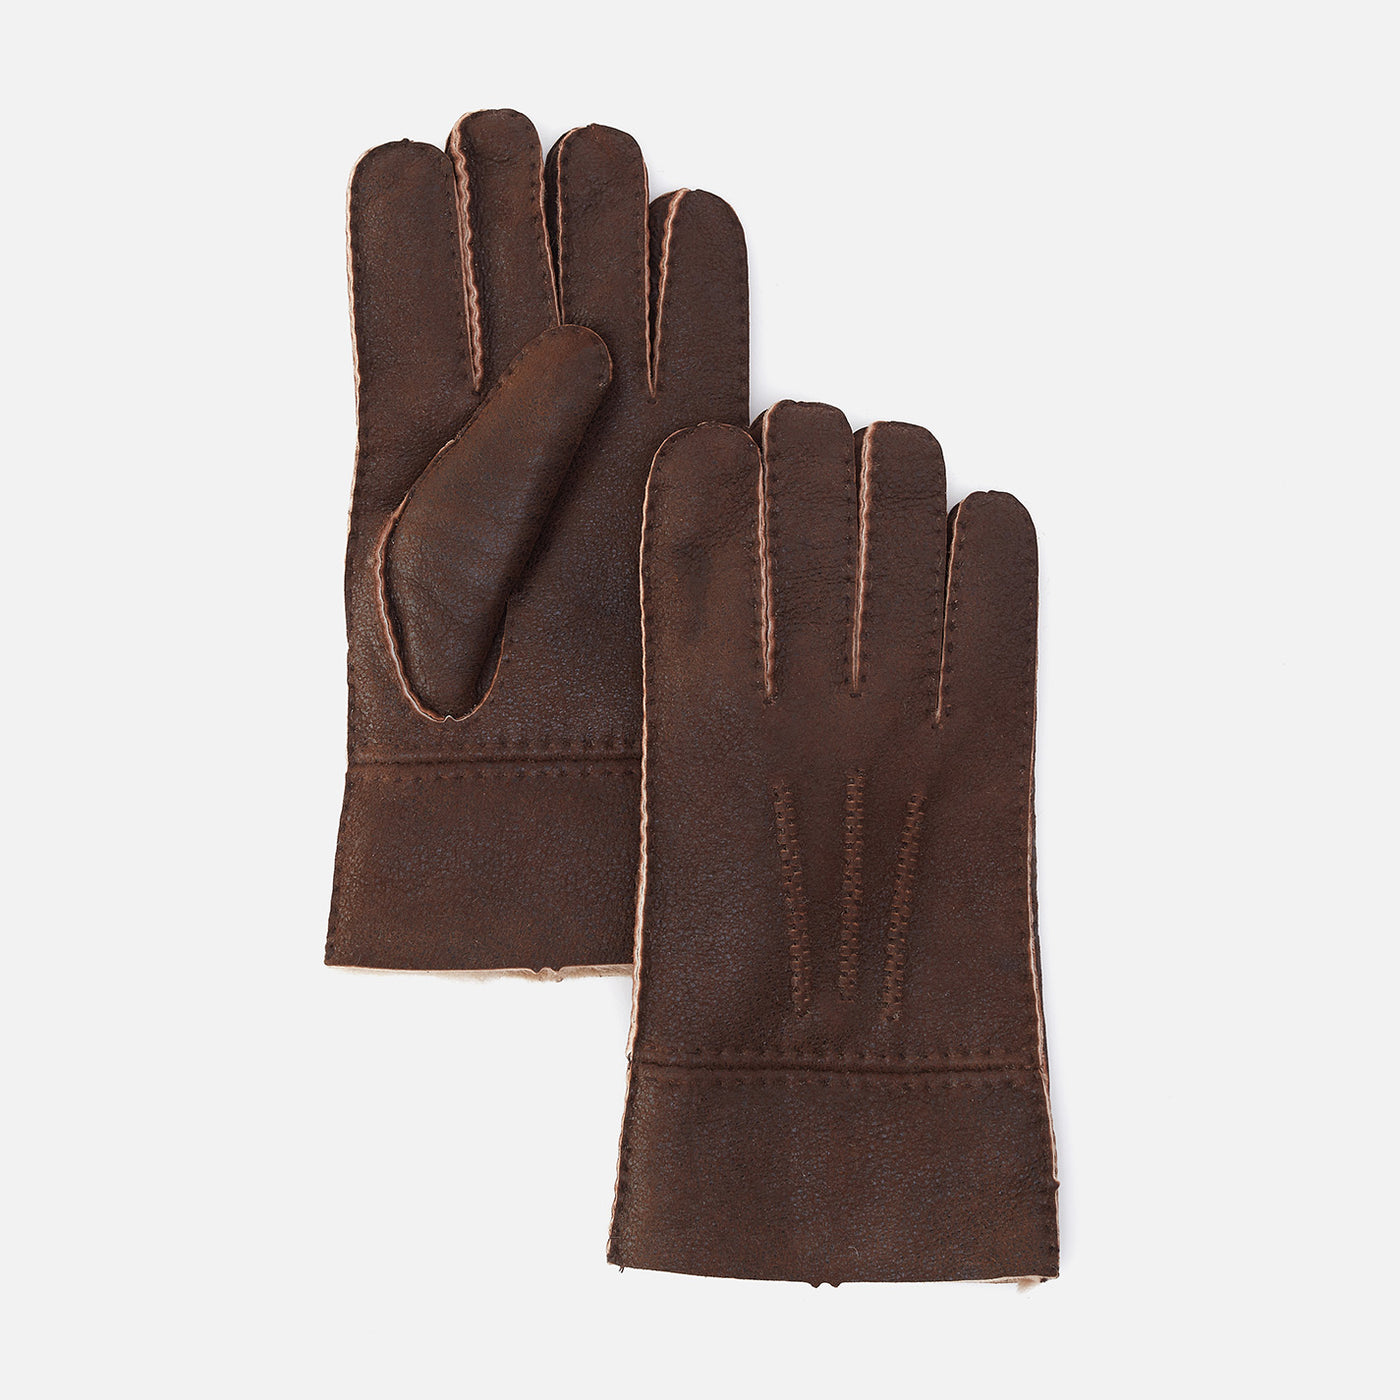 Rugged Castano Aviator Sheepskin Glove in Aston Leather - Medium